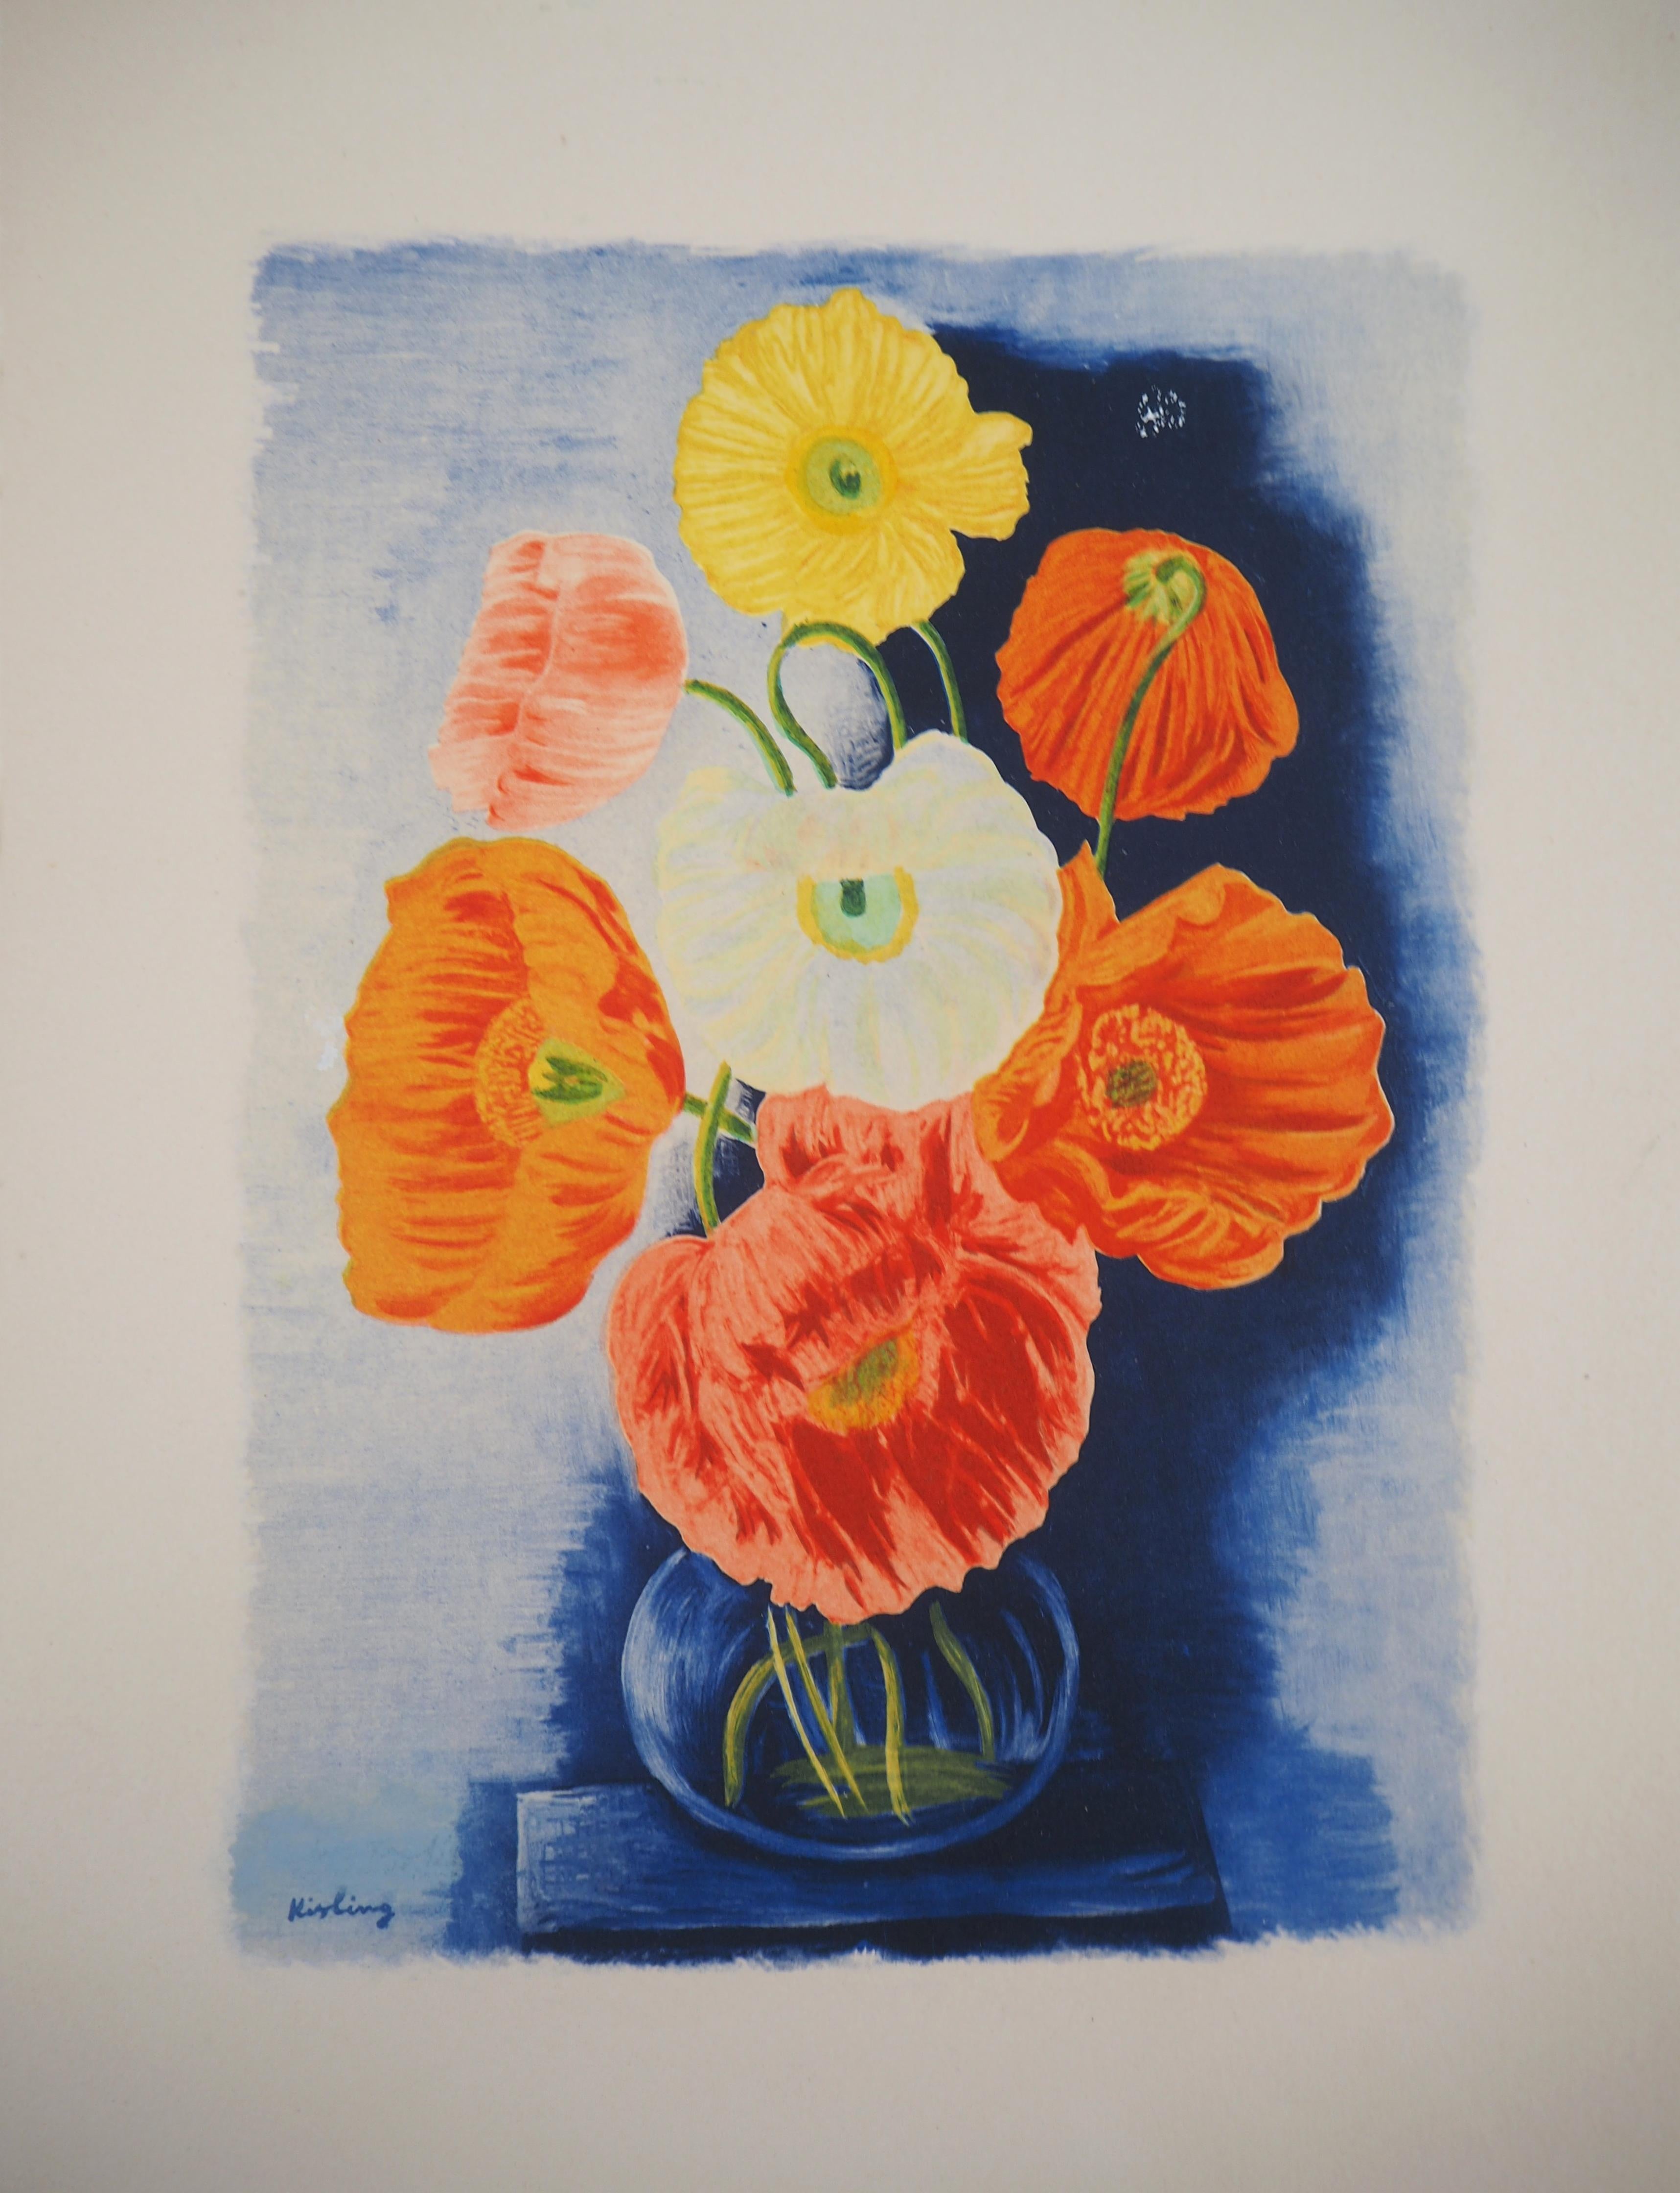 Moise Kisling Figurative Print - Bouquet of Poppies - Original Lithograph